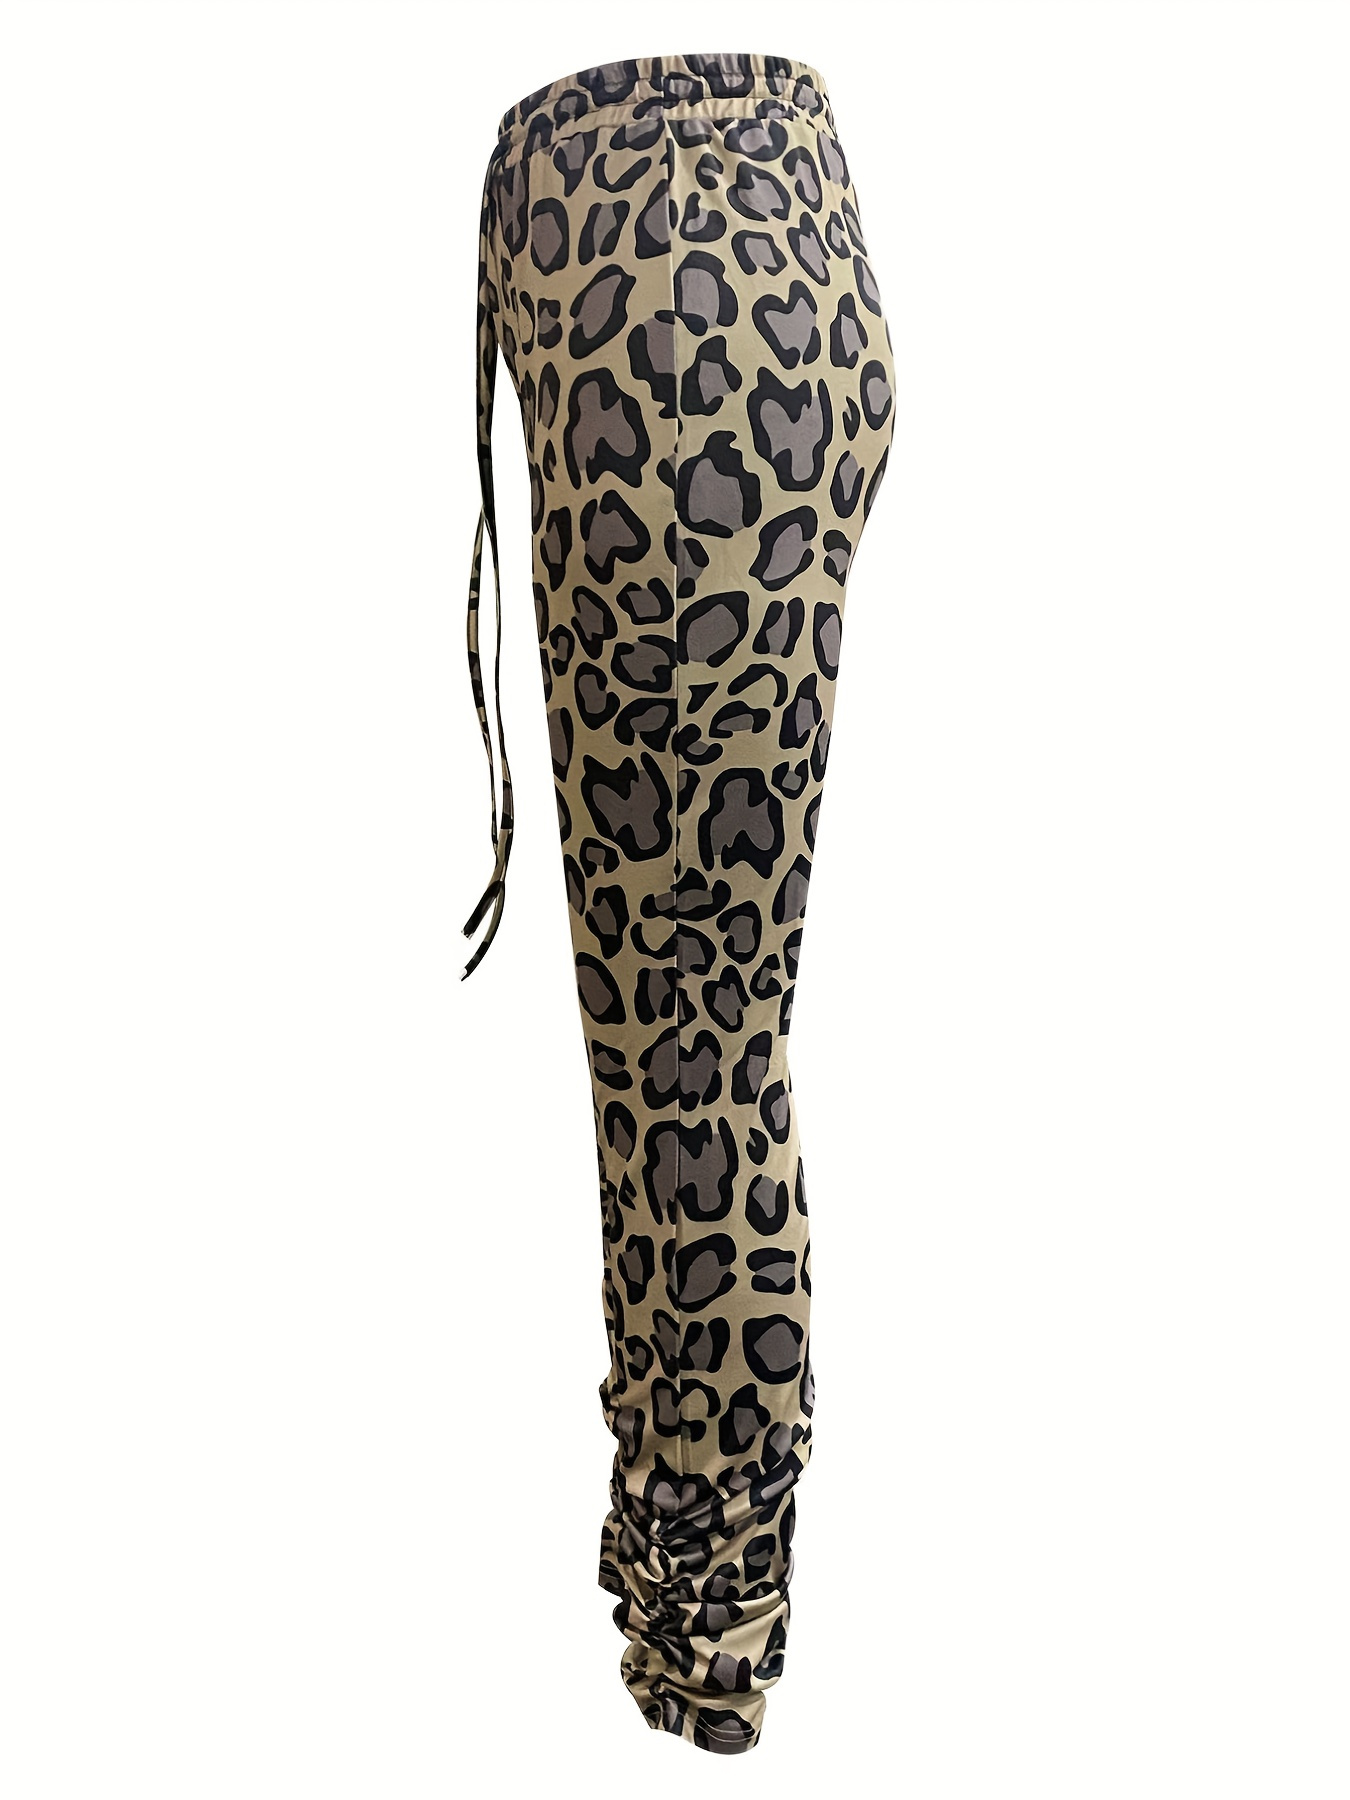 Leopard Print Women's Pants Elastic Waist Pocket Cropped Trousers Female  2021 Summer Autumn Fashion Loose Casual Ladies Pant